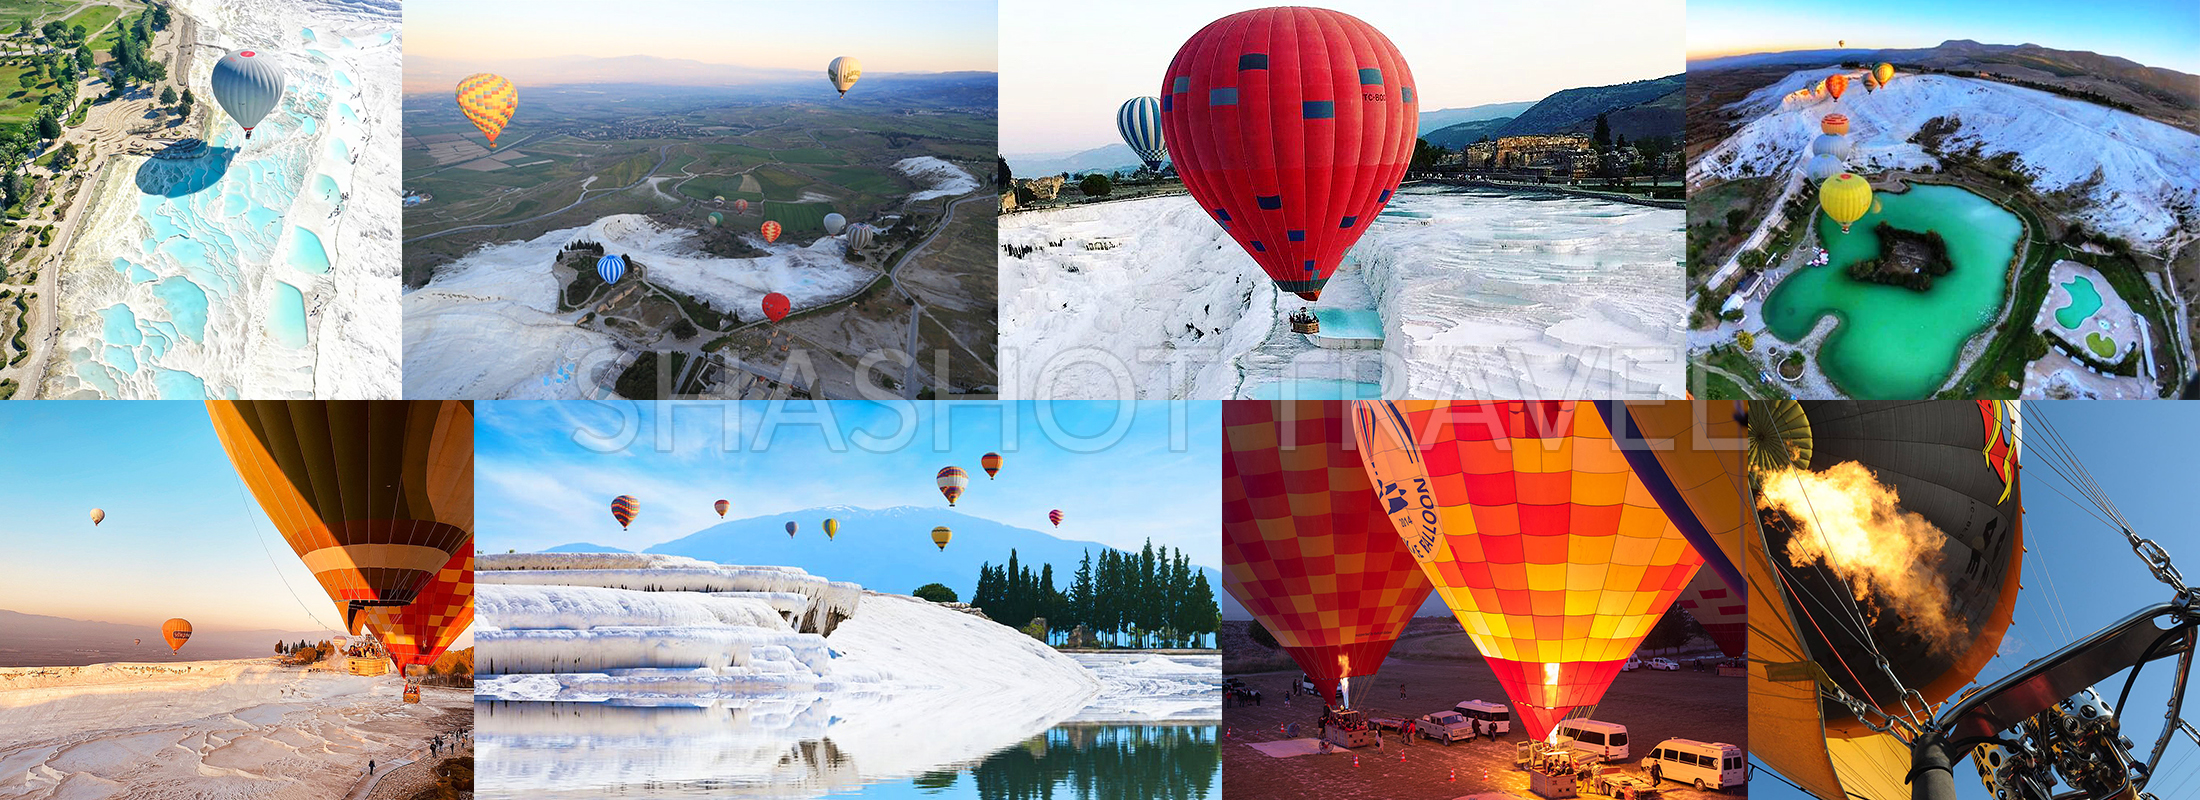 turkey-pamukkale-hot-air-balloon-tour-shashot-travel